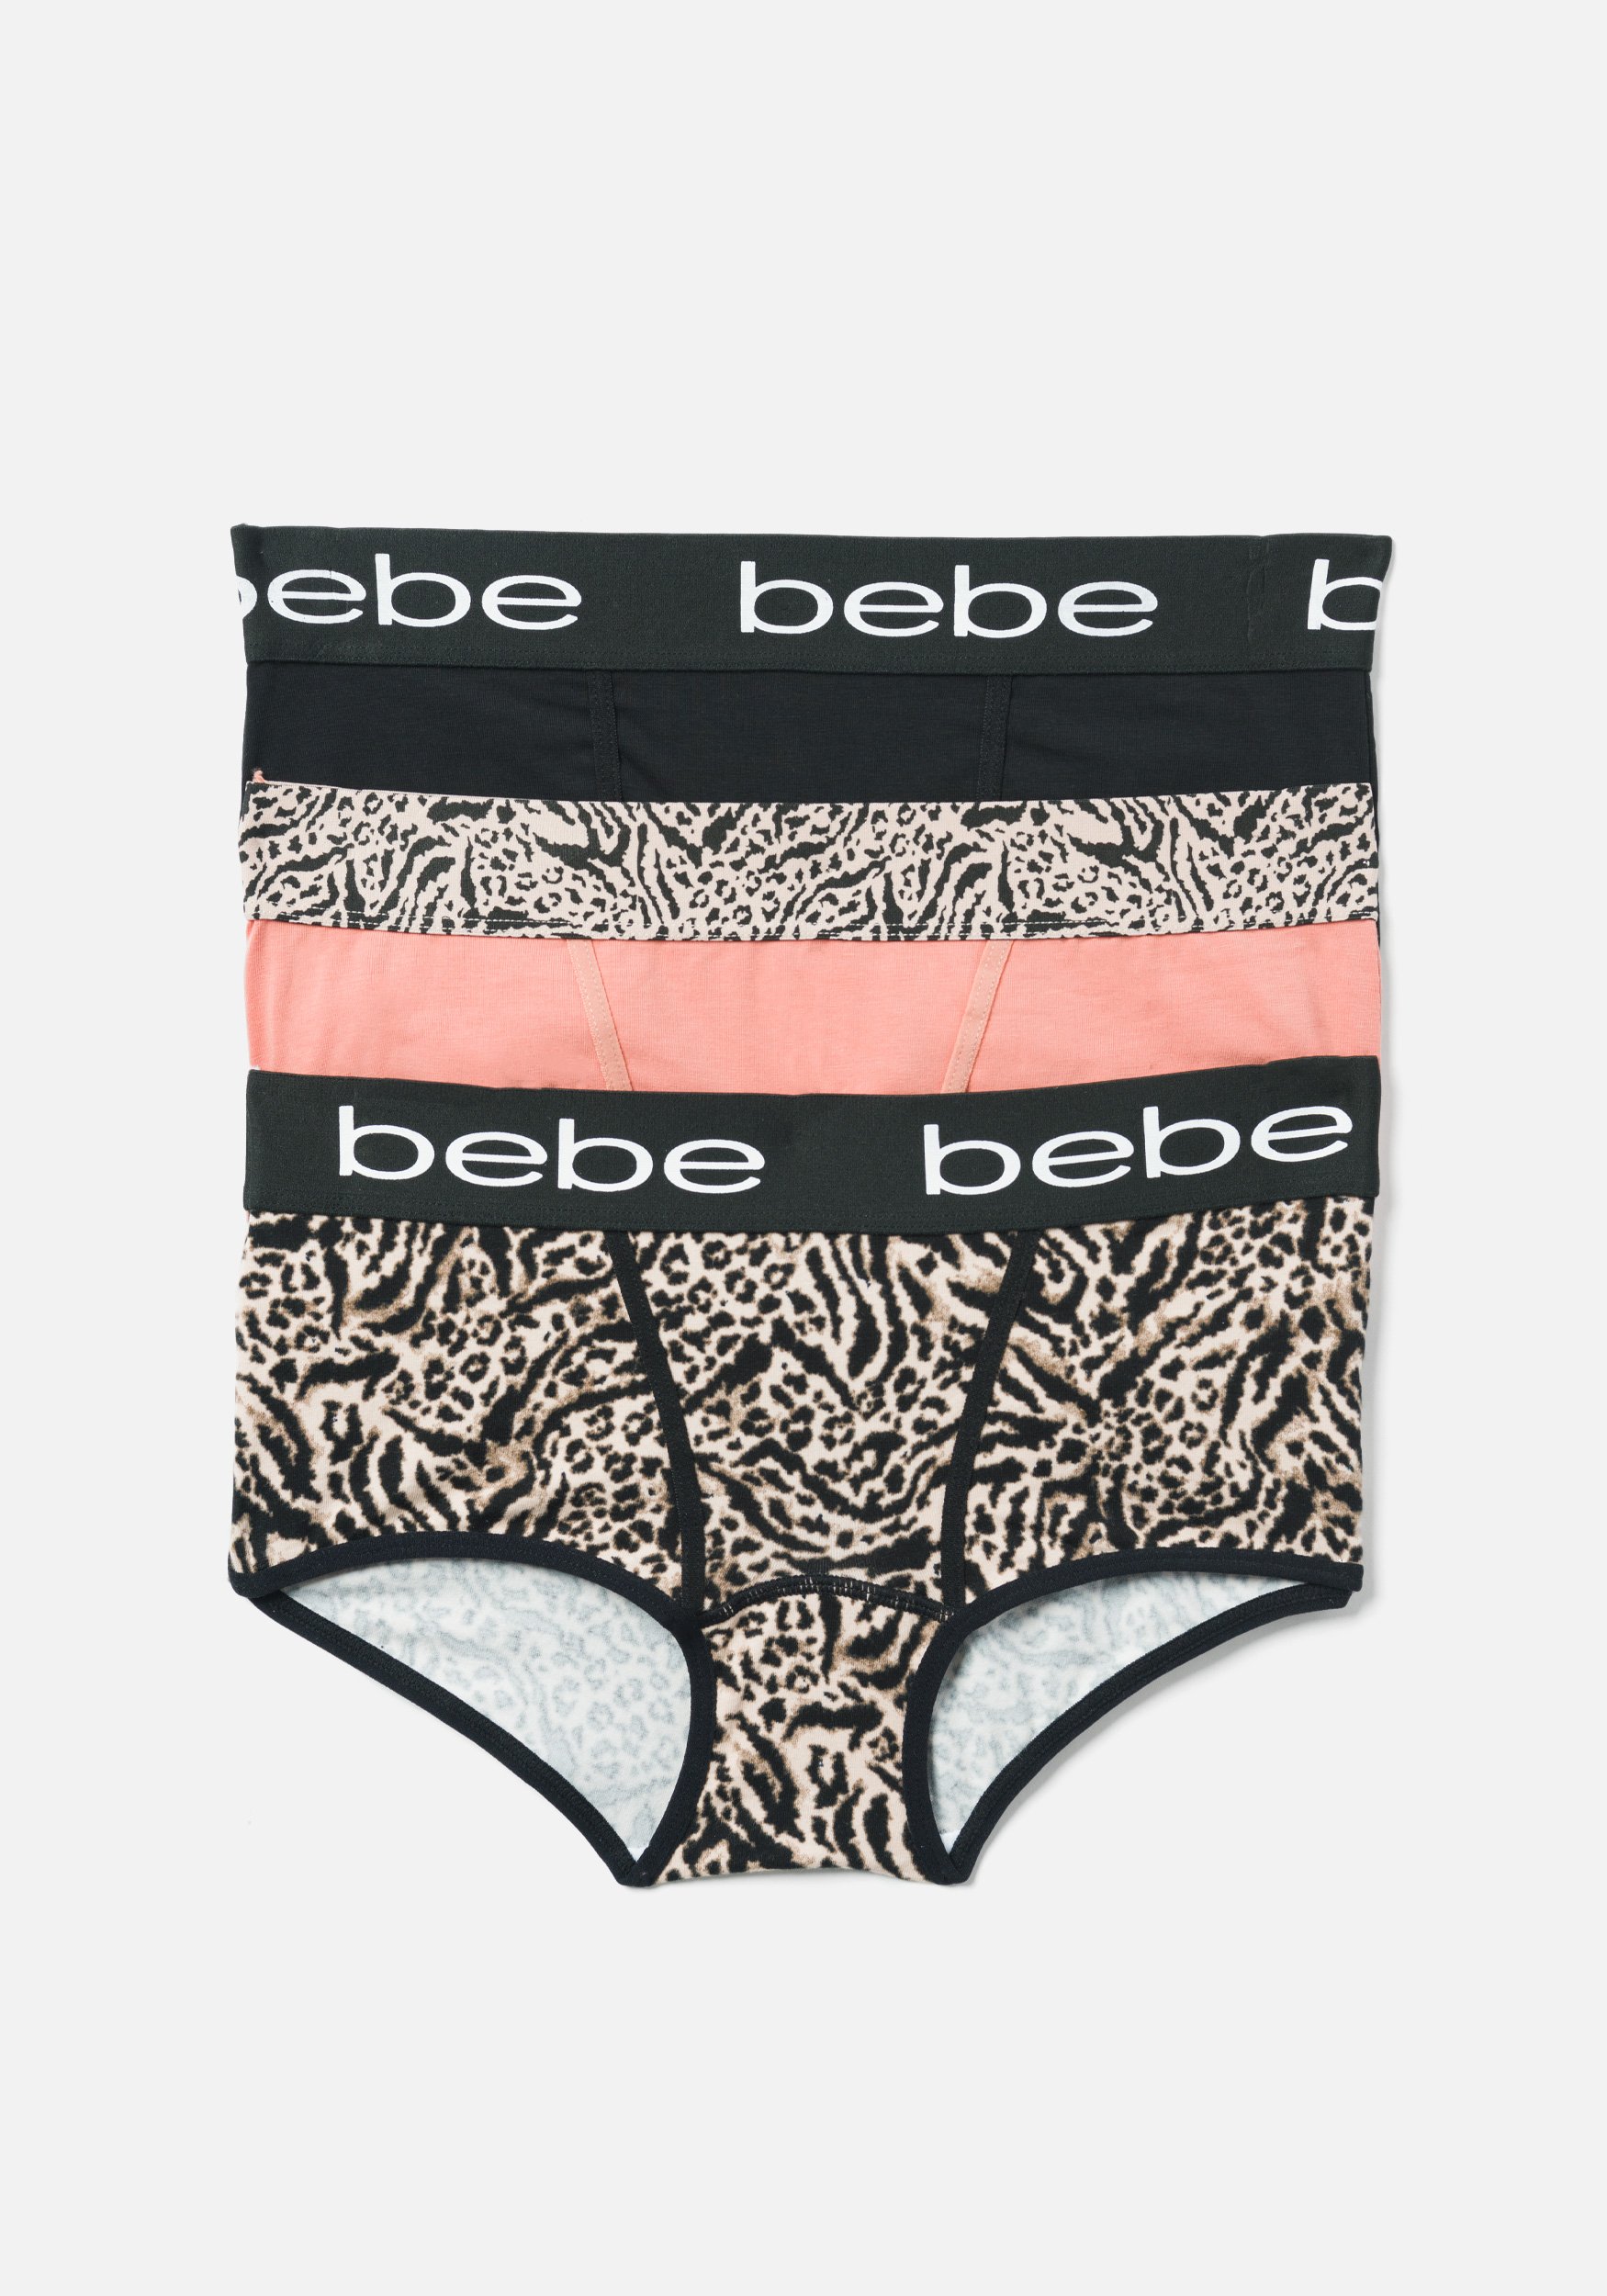 Bebe Women's Printed 3 Pack Panty Set, Size Medium in Animal Cotton/Spandex